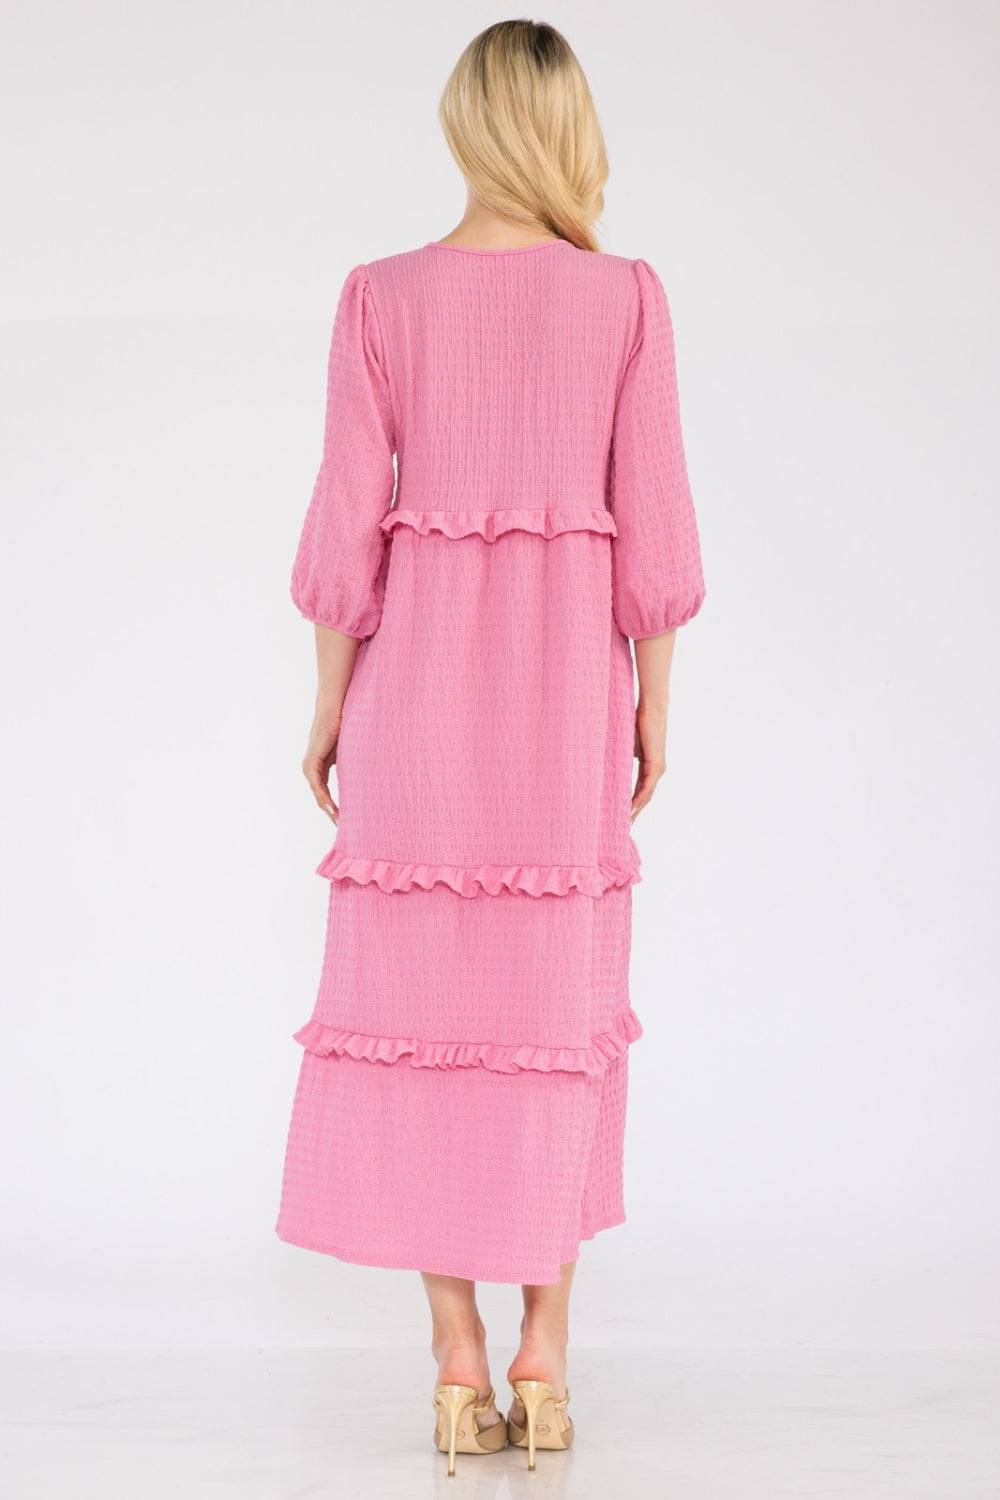 a woman wearing a pink dress with ruffles